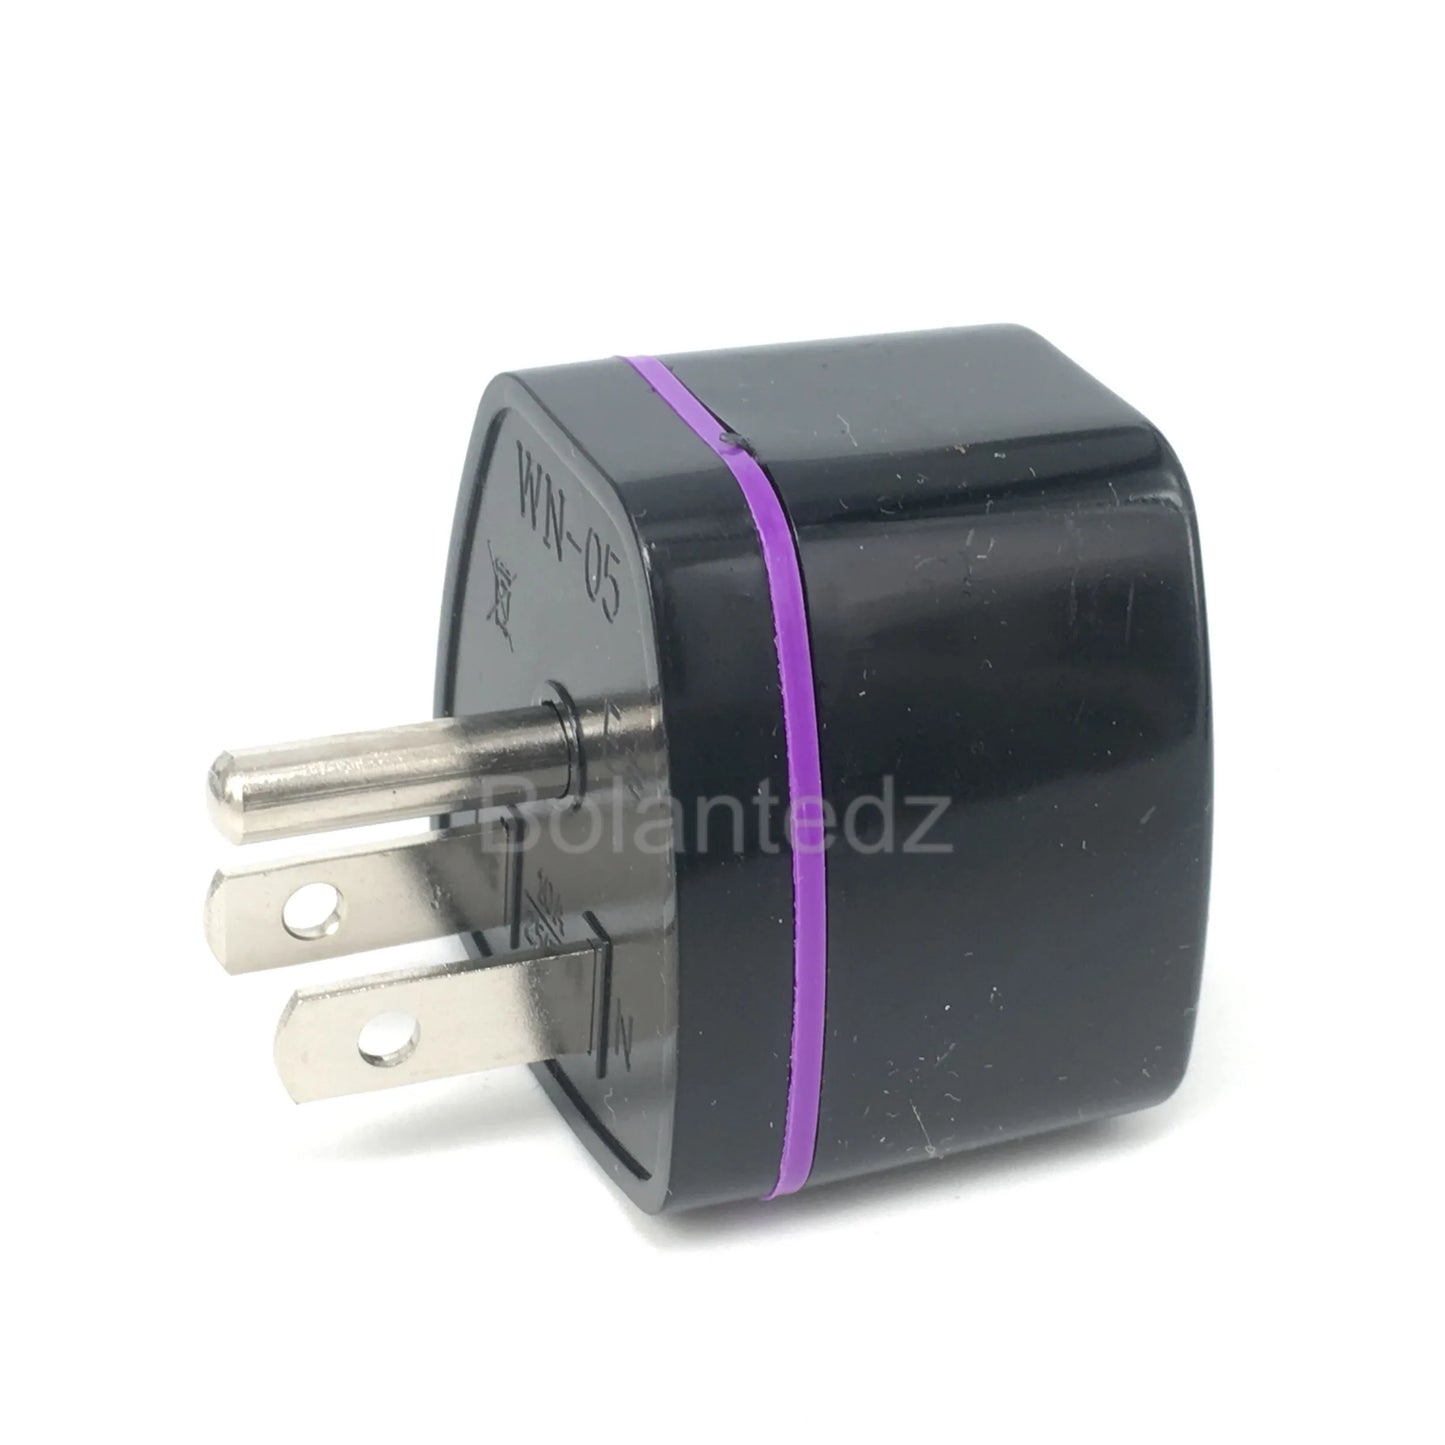 Universal USA Plug Adapter 3 Pin EU European AU UK To American US Travel Power Adapter Electric Plug Converter Socket Outlet